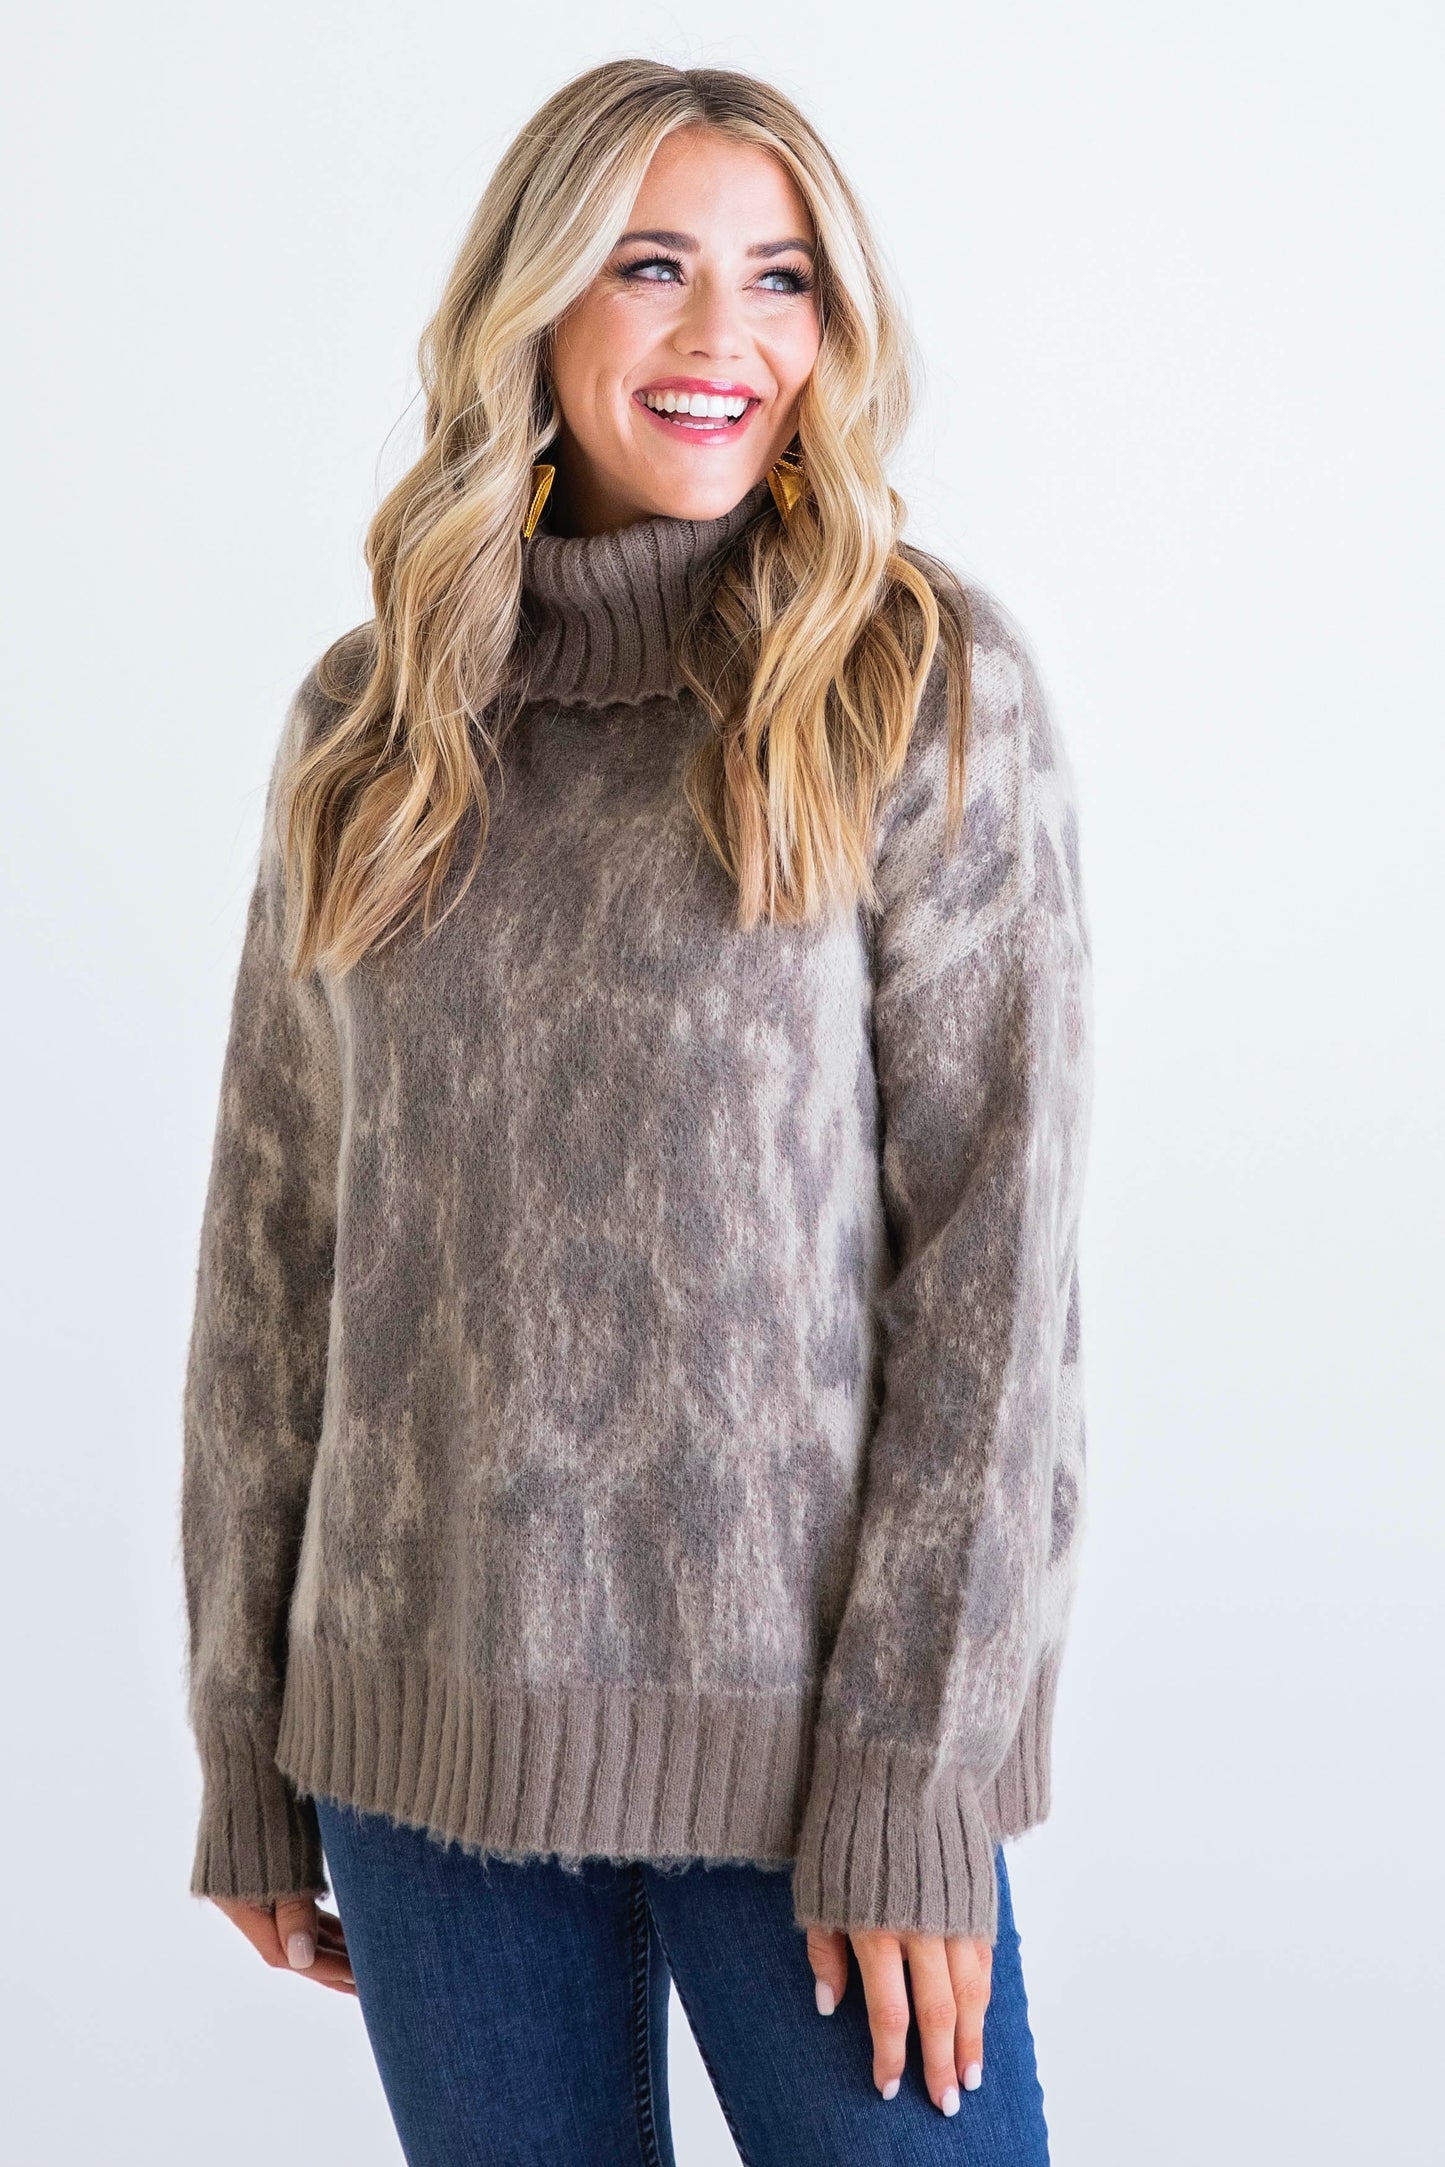 Taupe/Olive Leopard Turtleneck Sweater